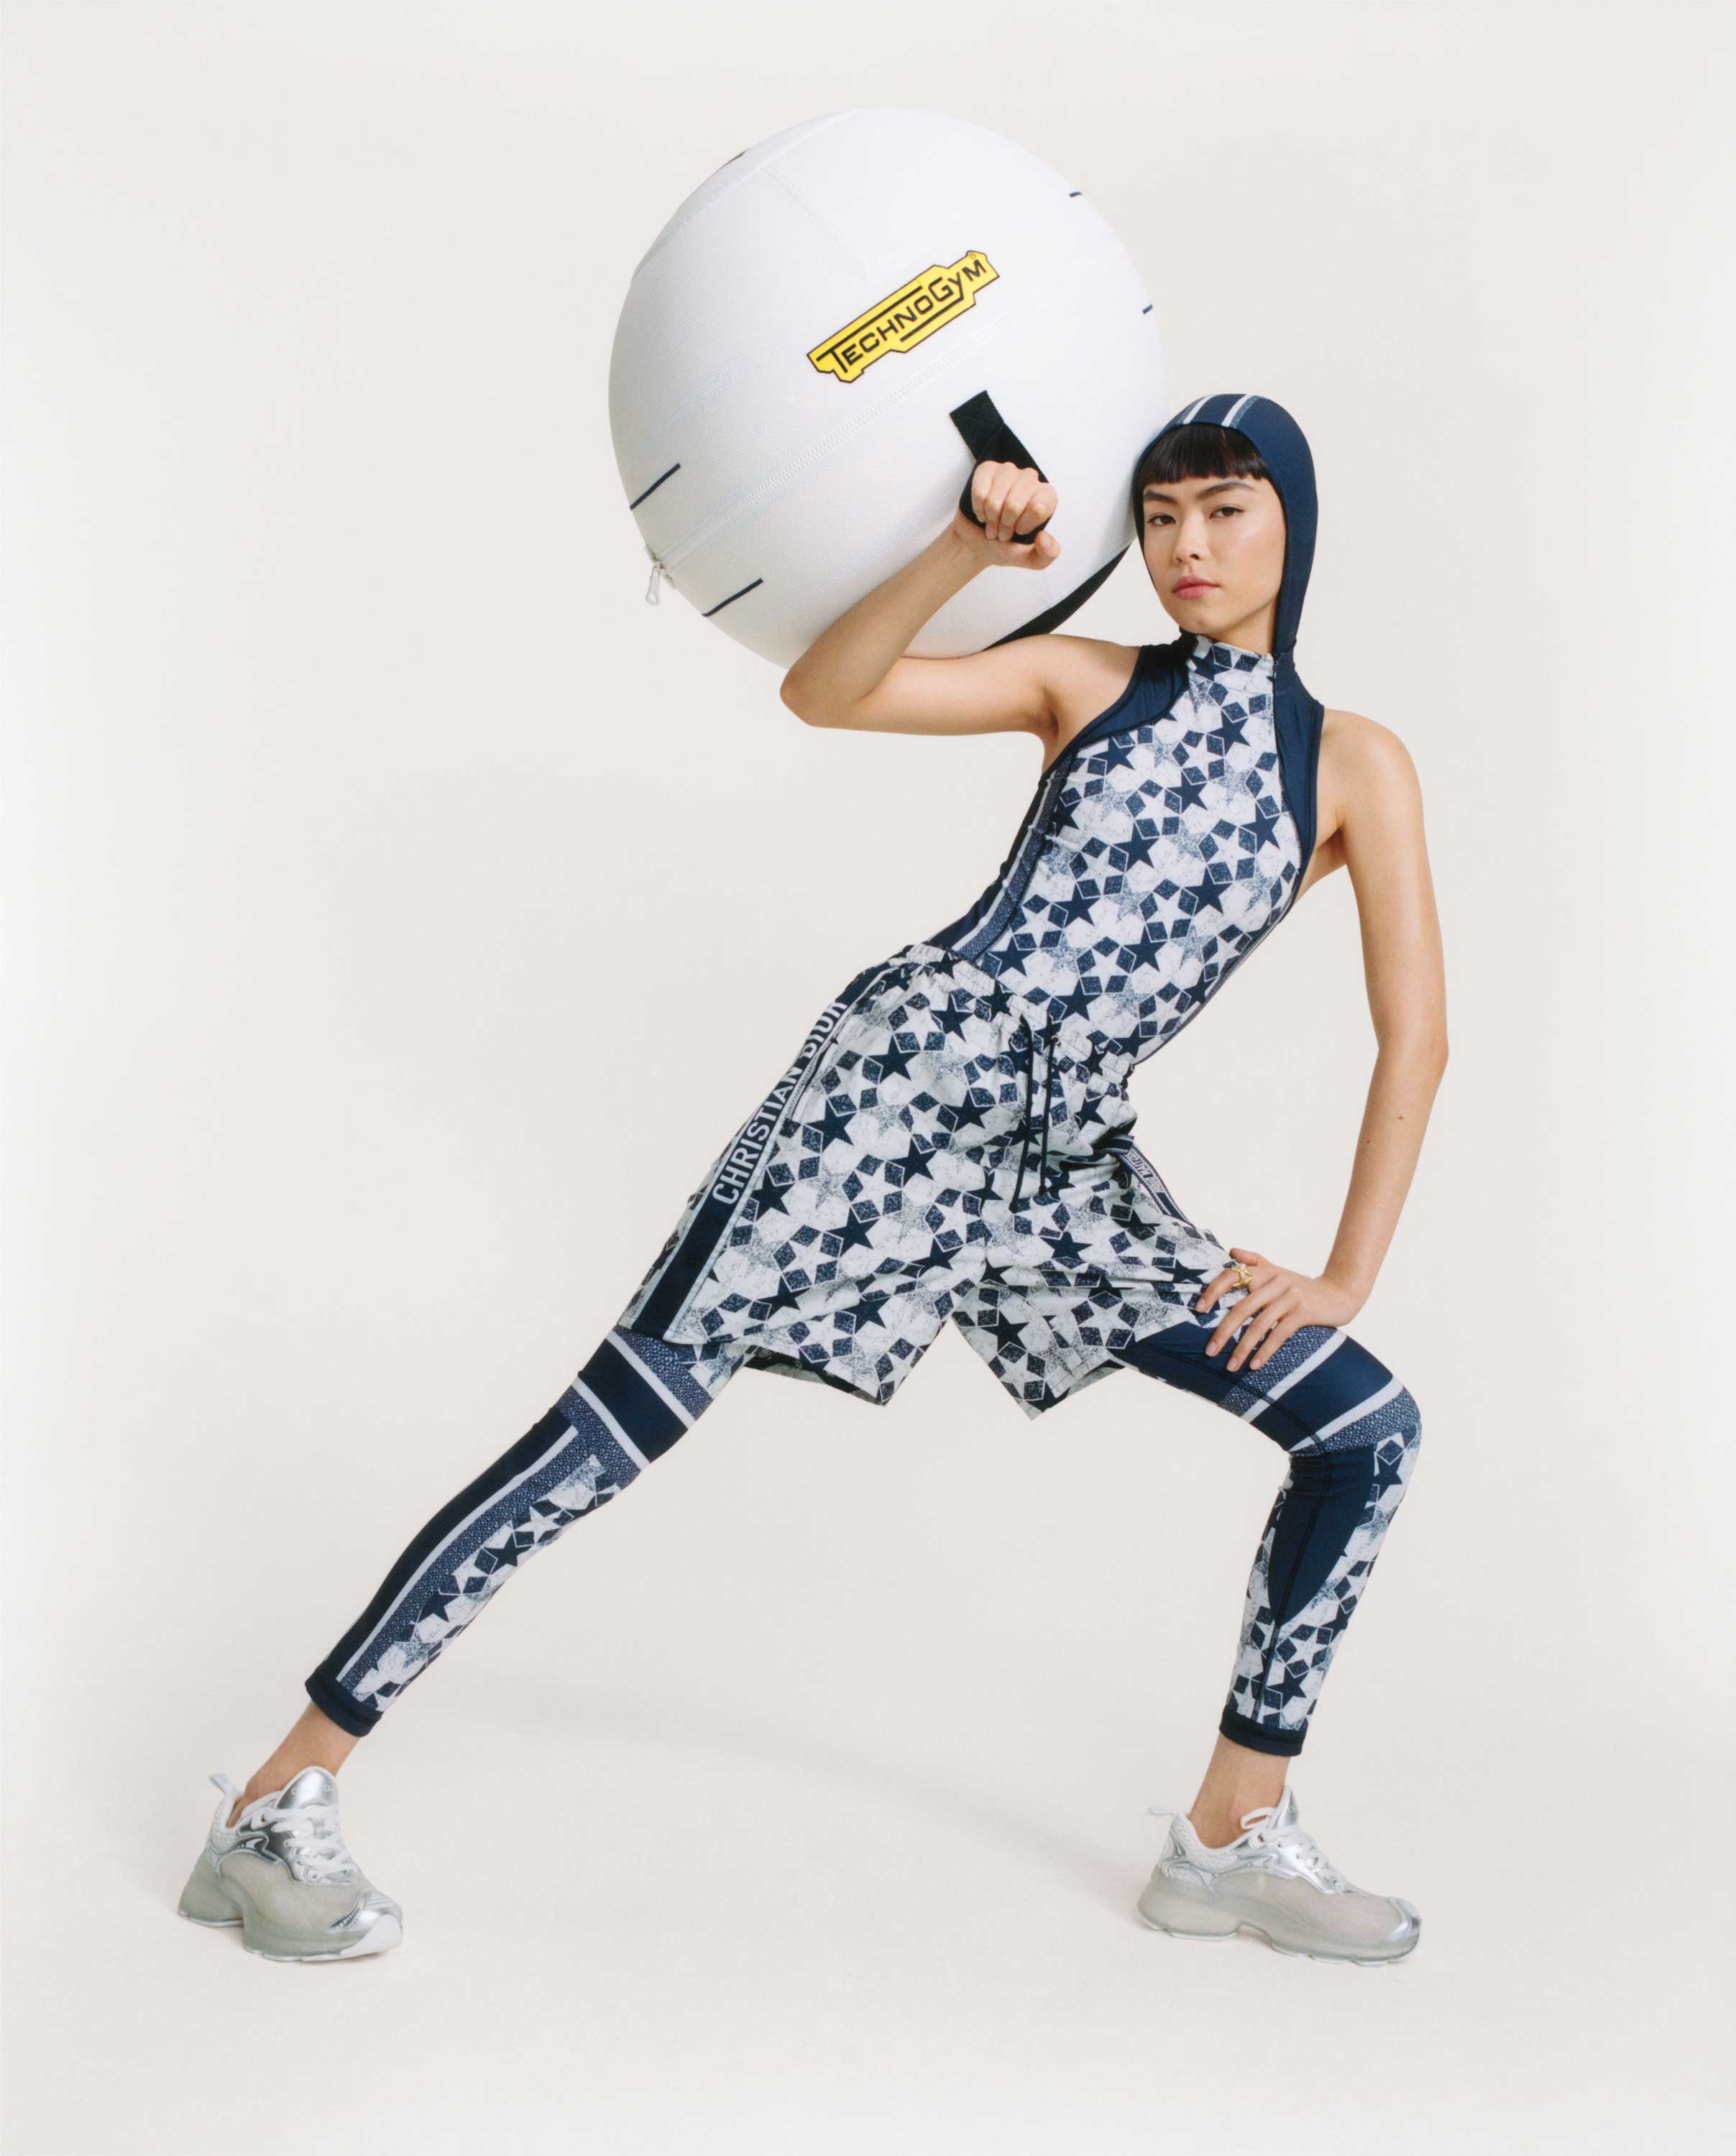 Dior x Technogym: Branded Treadmill, Workout Bench & Fitness Ball